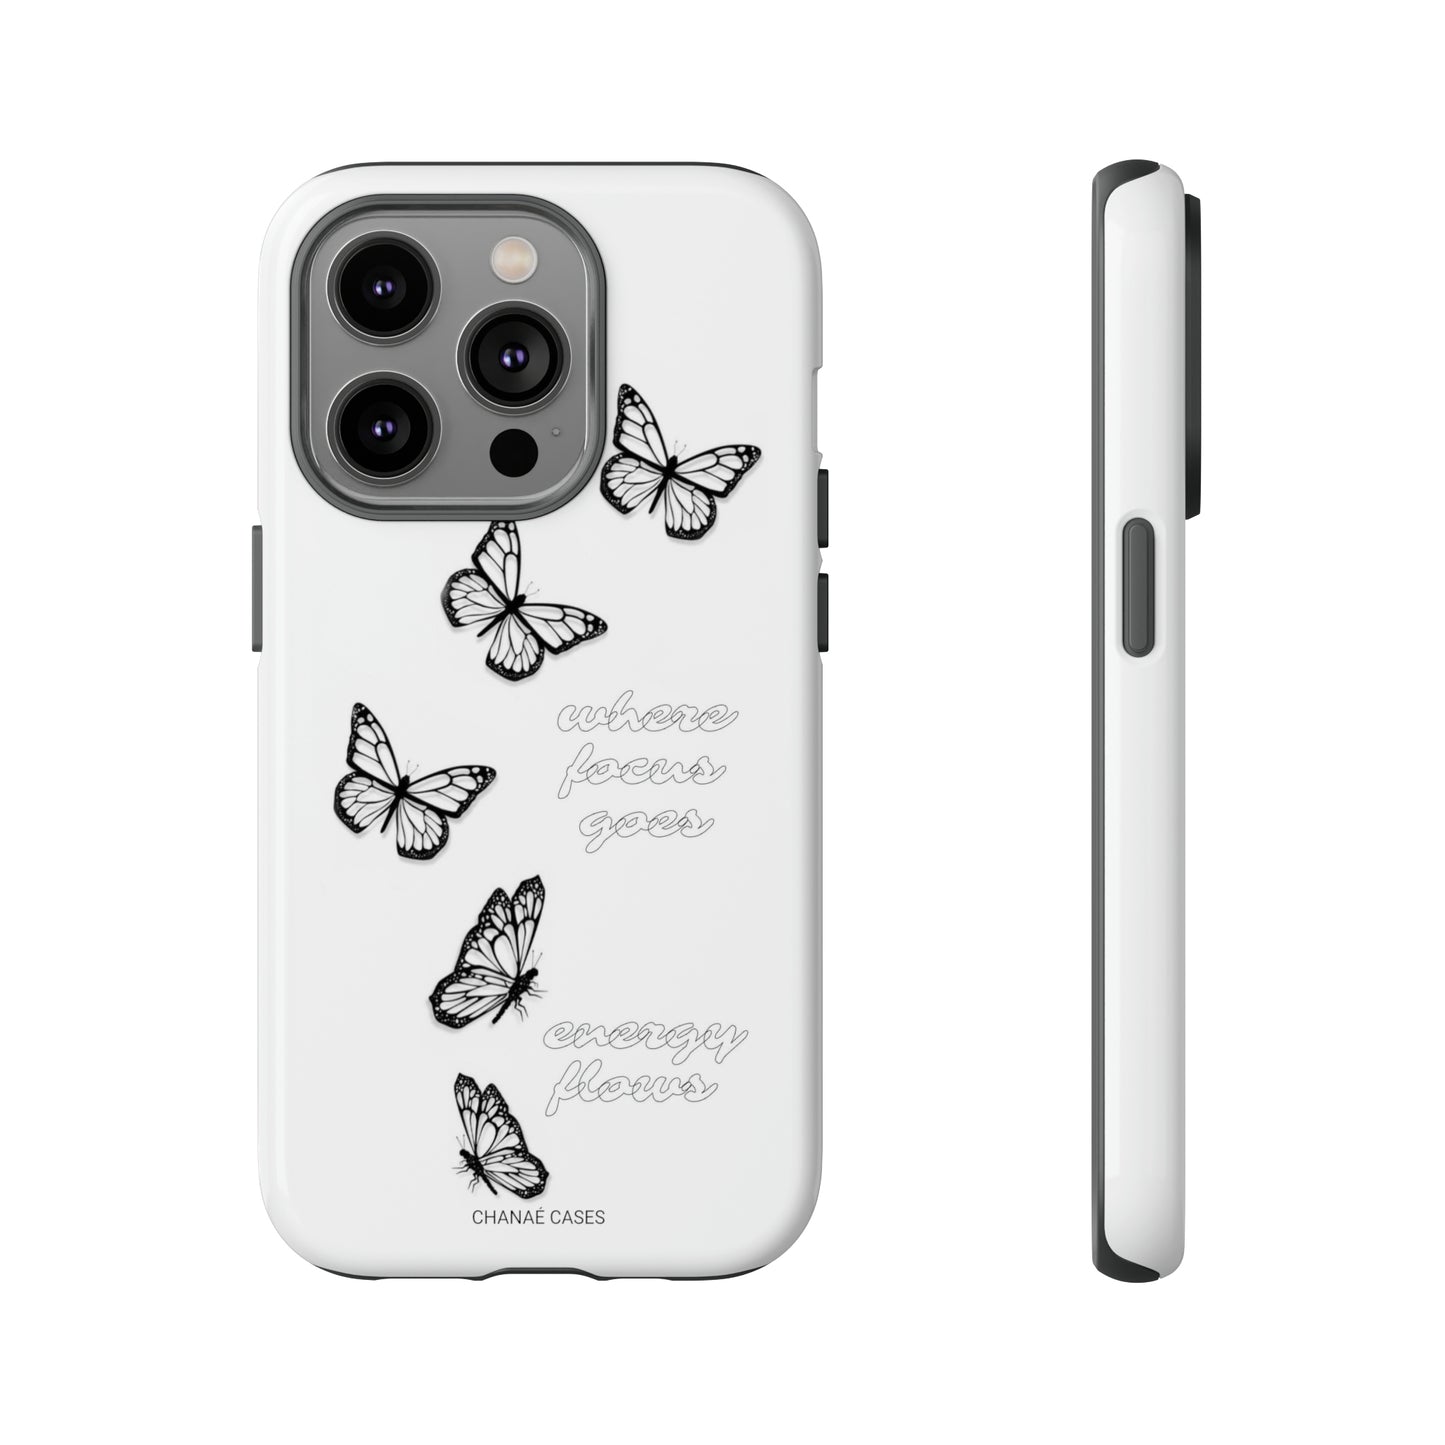 Shelbie iPhone "Tough" Case (White)